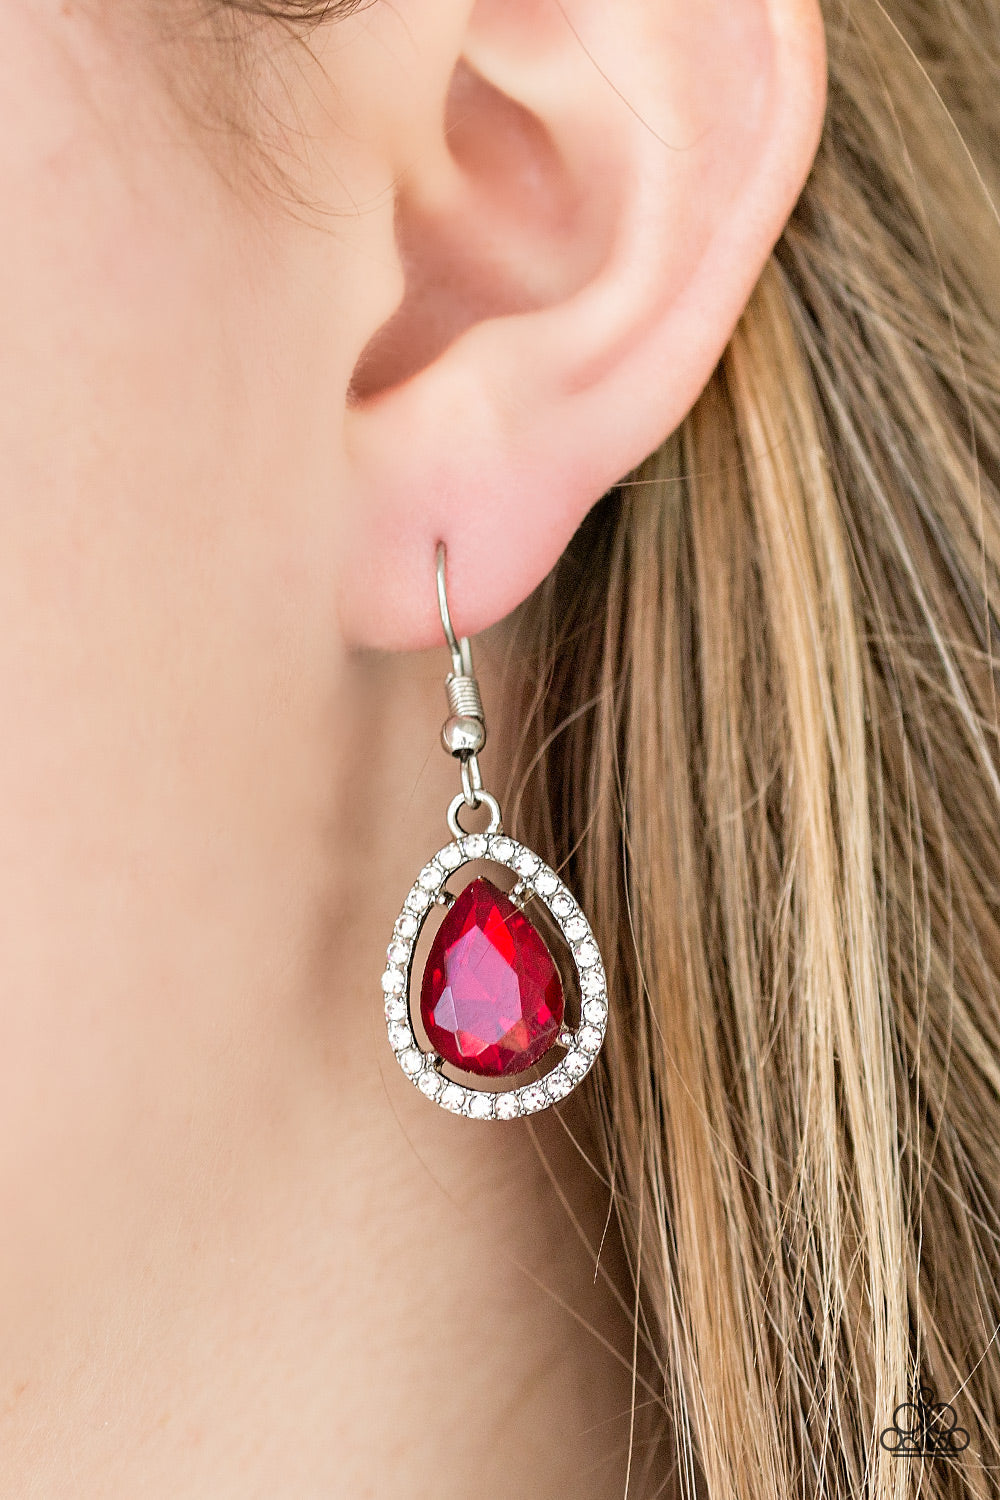 Paparazzi A One-GLAM Show - Red Rhinestone - Earrings - $5 Jewelry With Ashley Swint